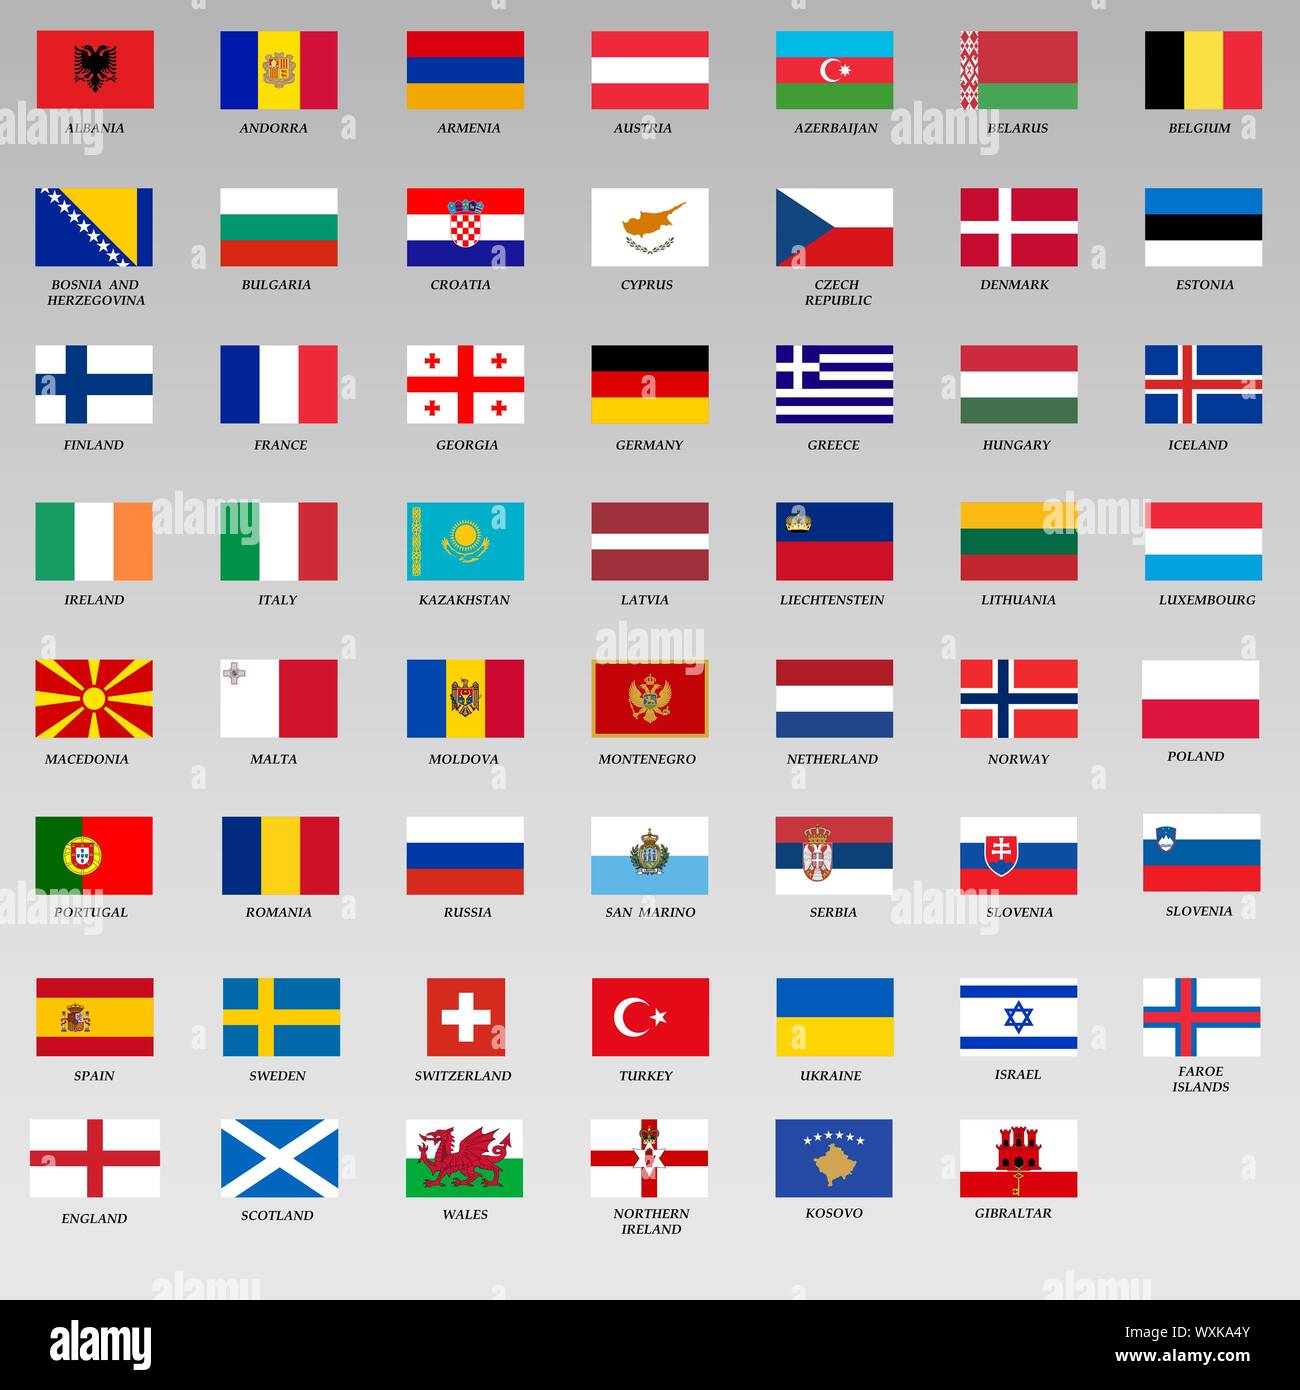 Europa - Flagge mit 28 Mitgliedsstaaten-Fahne Europa - Flagge mit